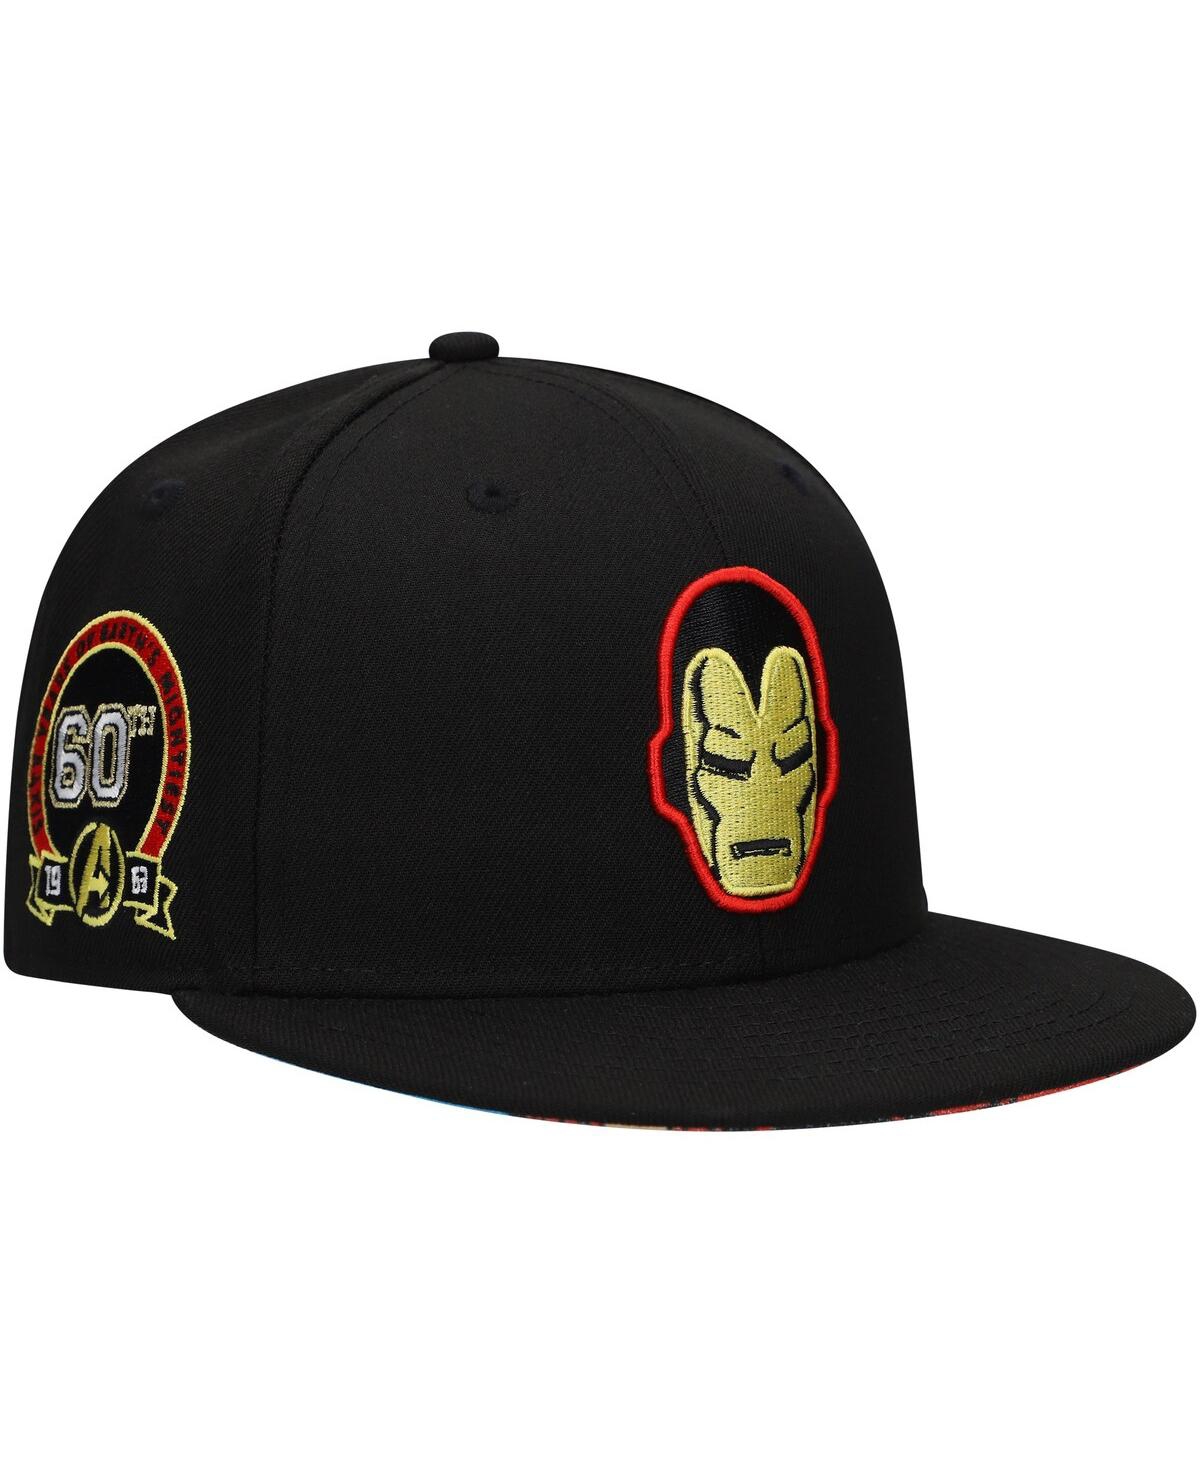 Men's Black Iron Man Marvel 60th Anniversary Snapback Hat - Black